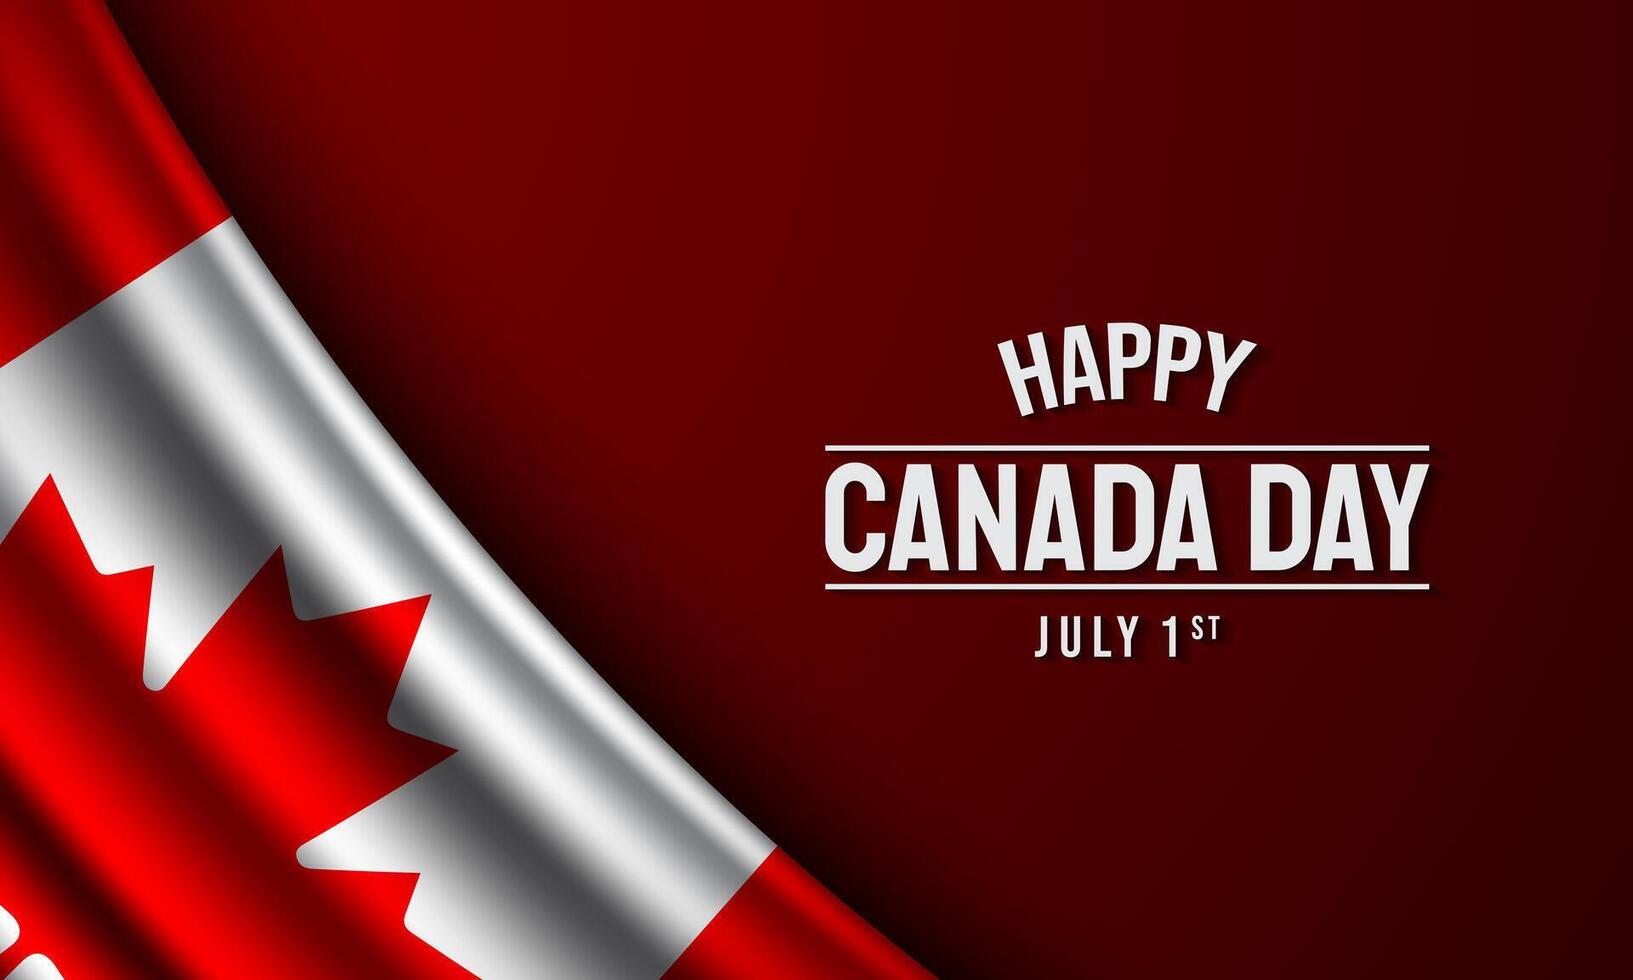 Canada Day Background Design. vector